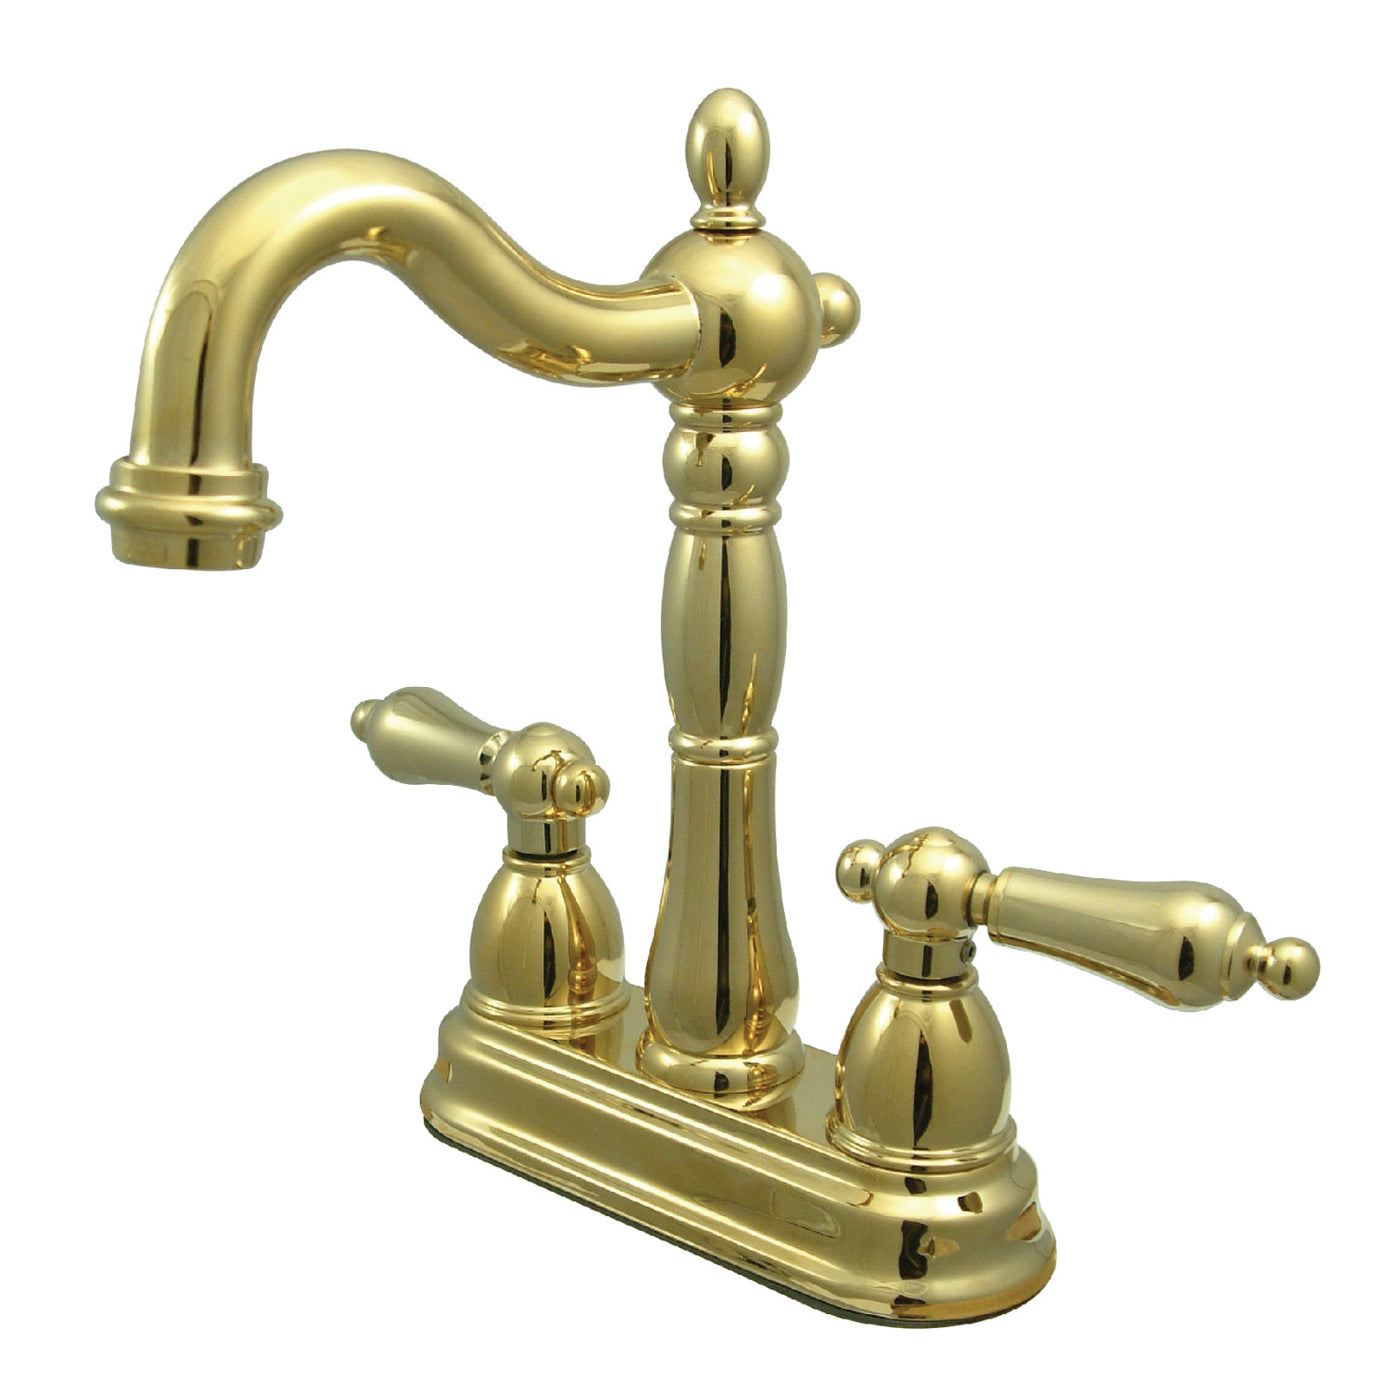 Elements of Design EB1492AL 4-Inch Centerset Bar Faucet, Polished Brass